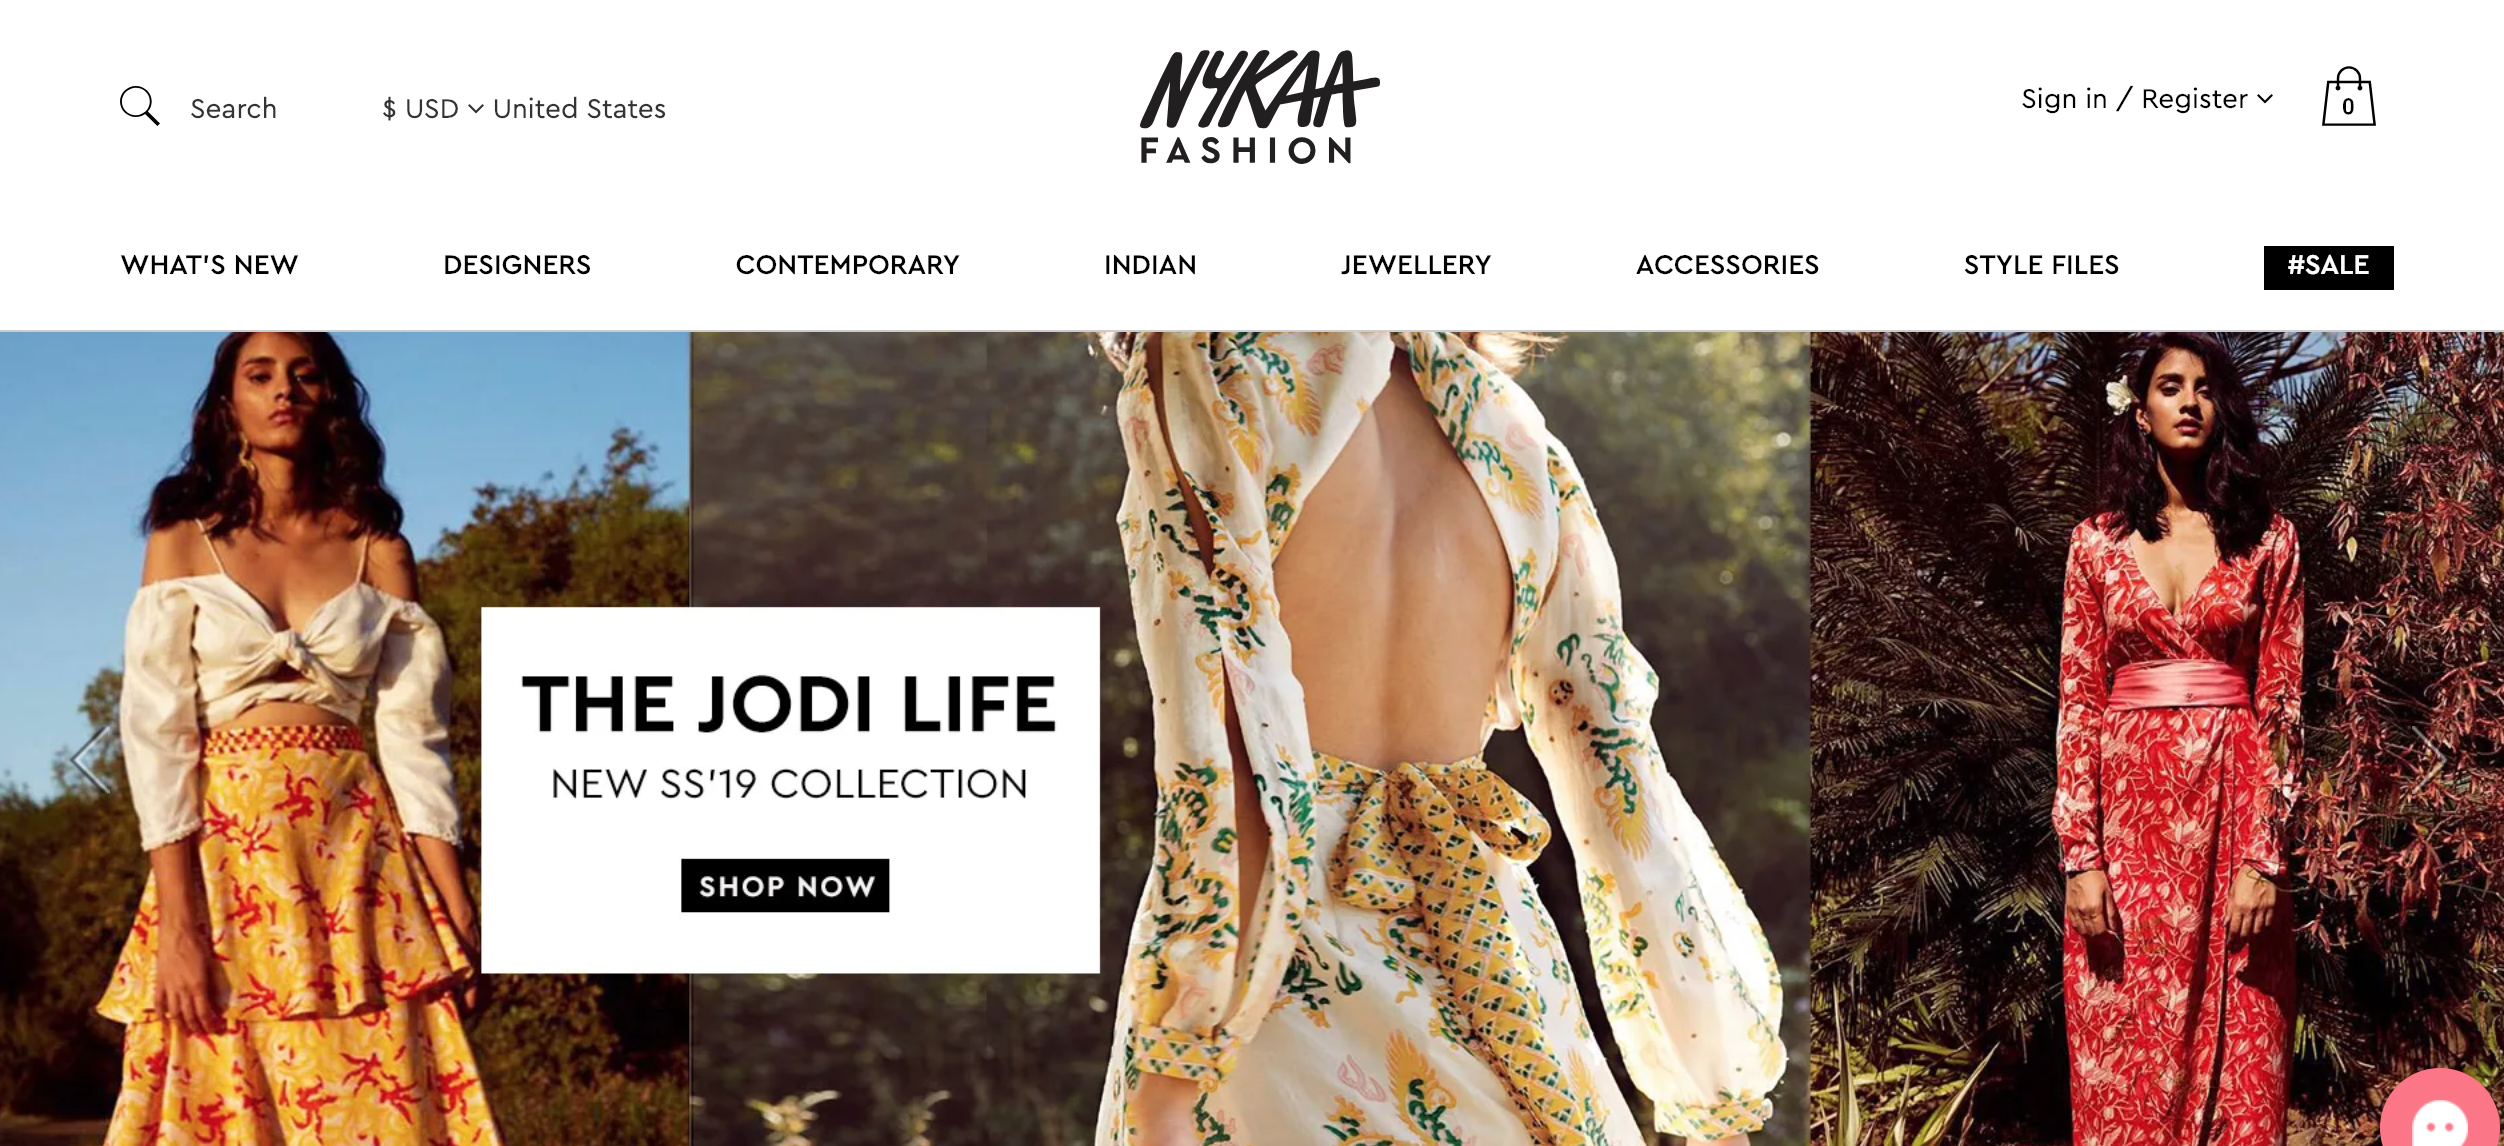 Nykaa Fashion homepage